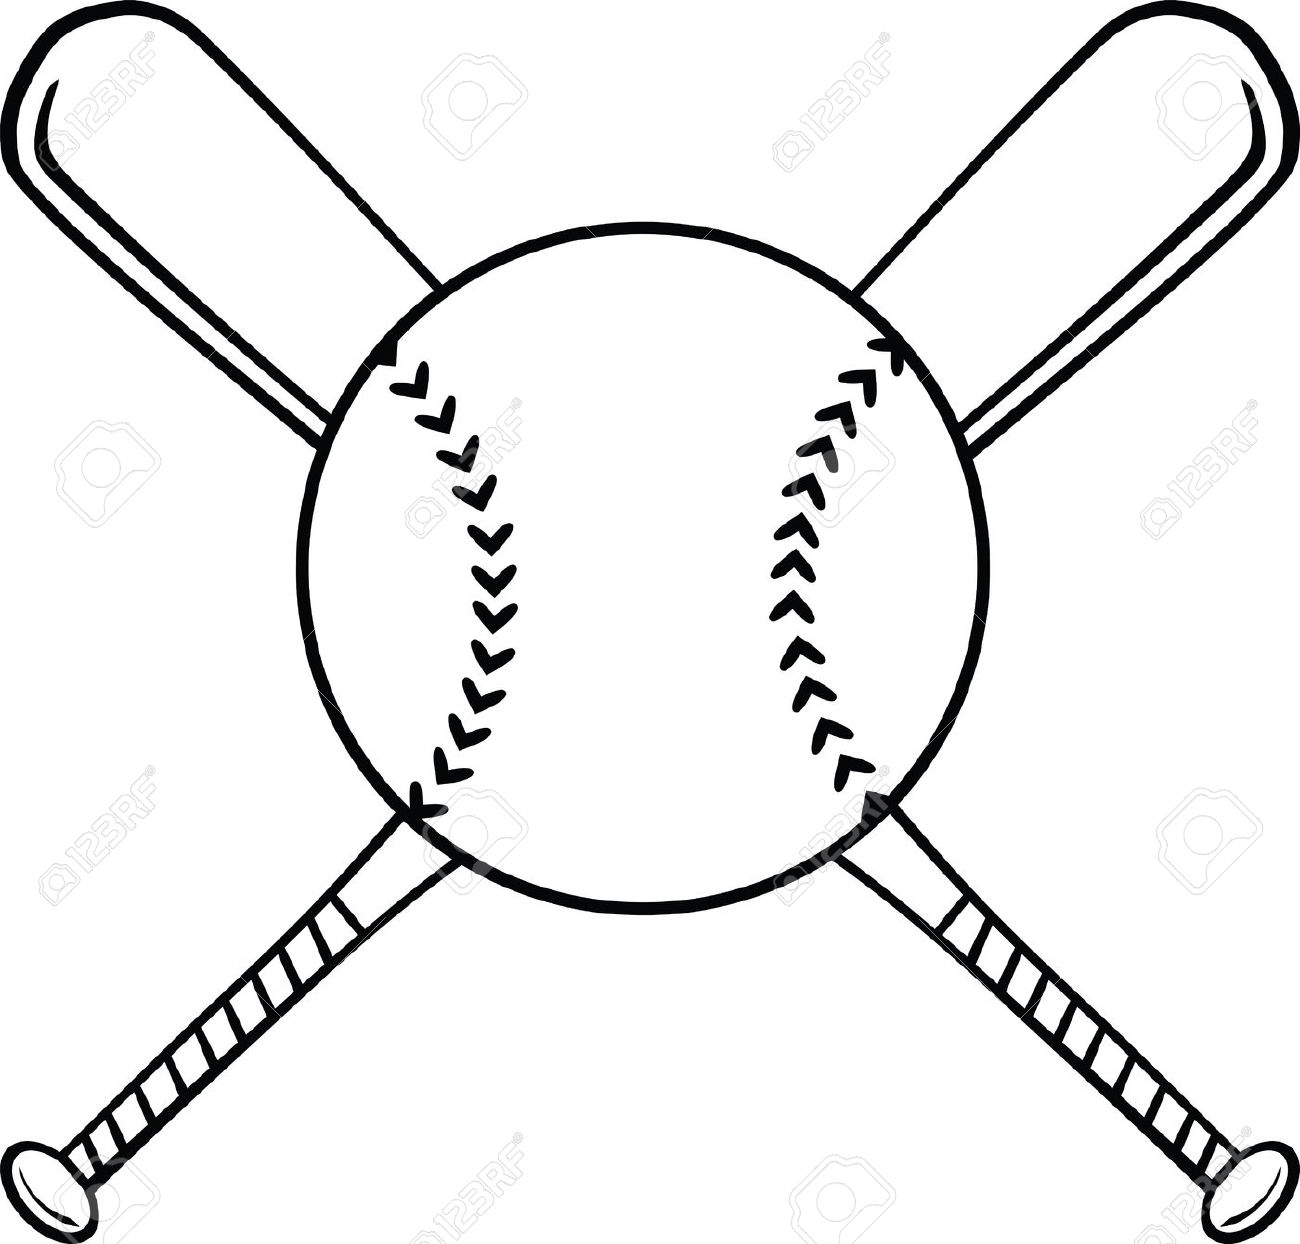 Baseball black and white phot